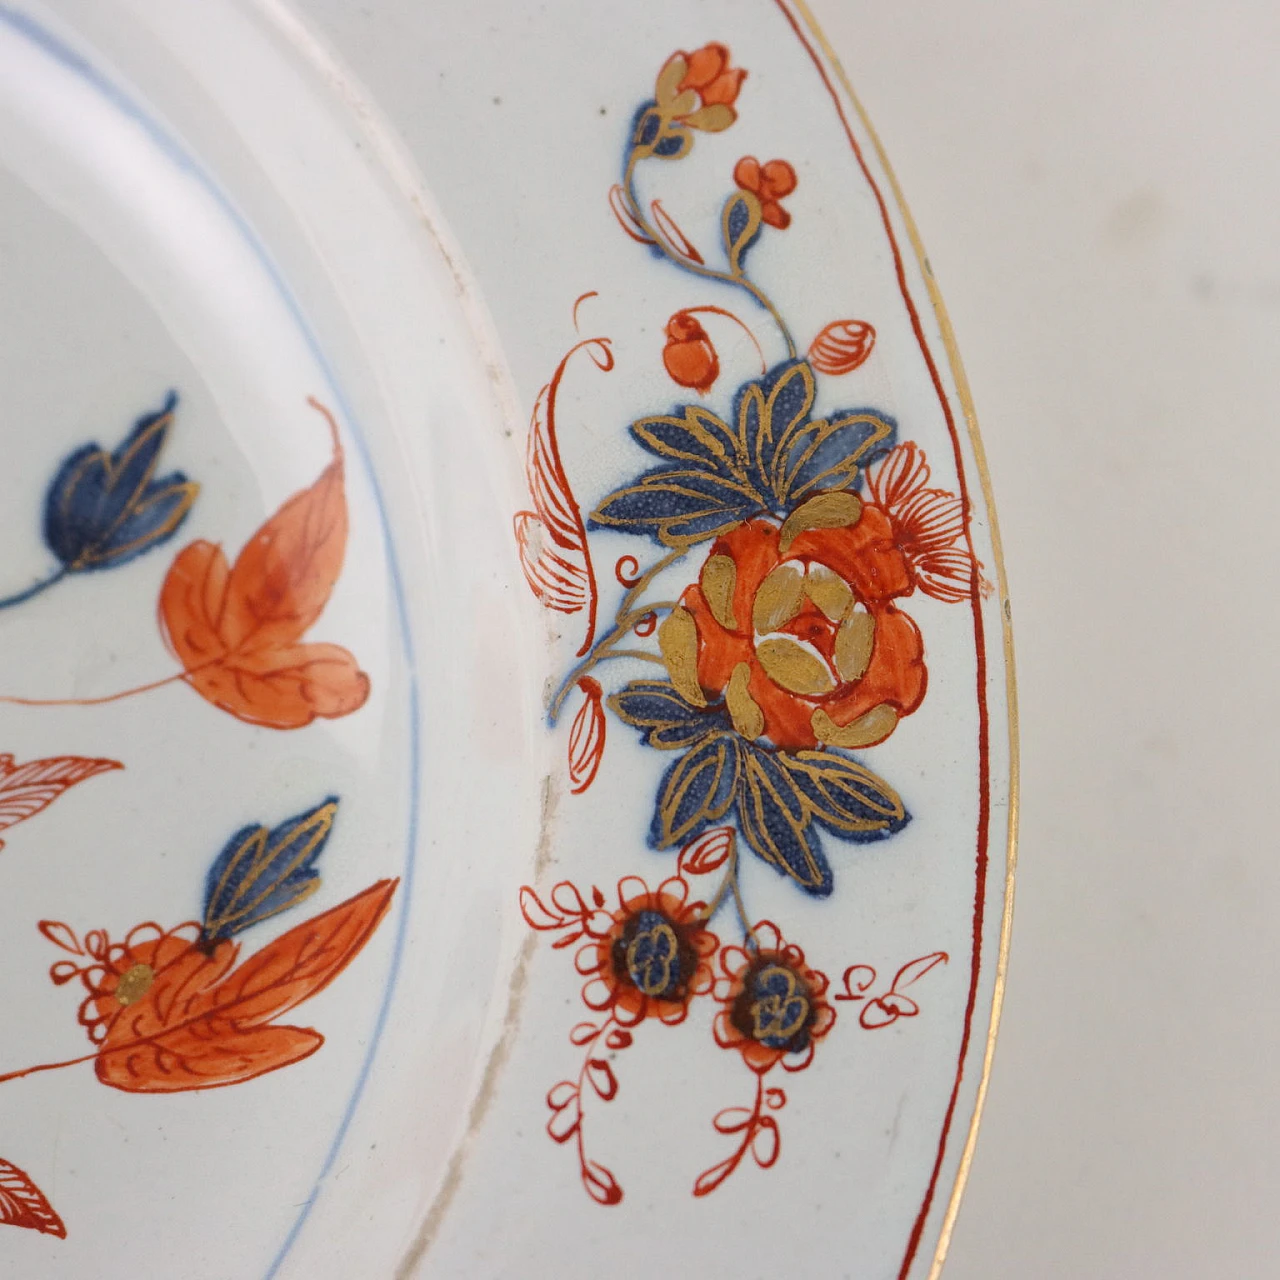 4 Polychrome majolica plates by Rubati, 18th century 6